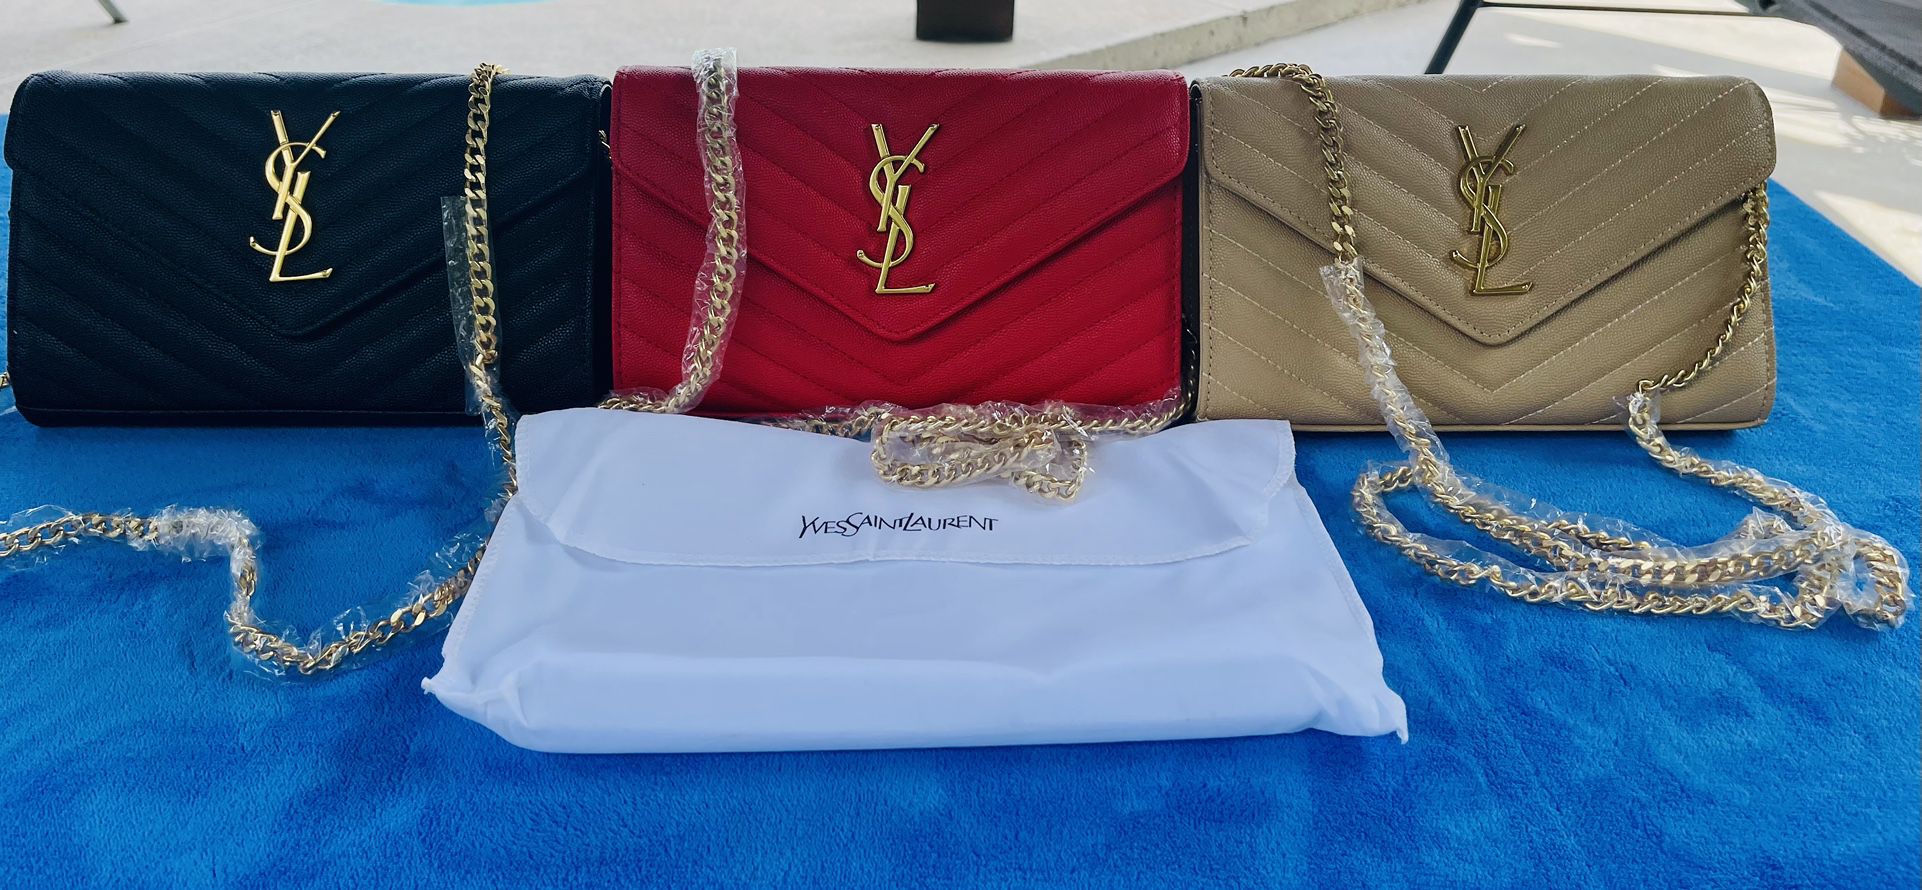 Yves Saint Laurent Bag for Sale in Wahneta, FL - OfferUp